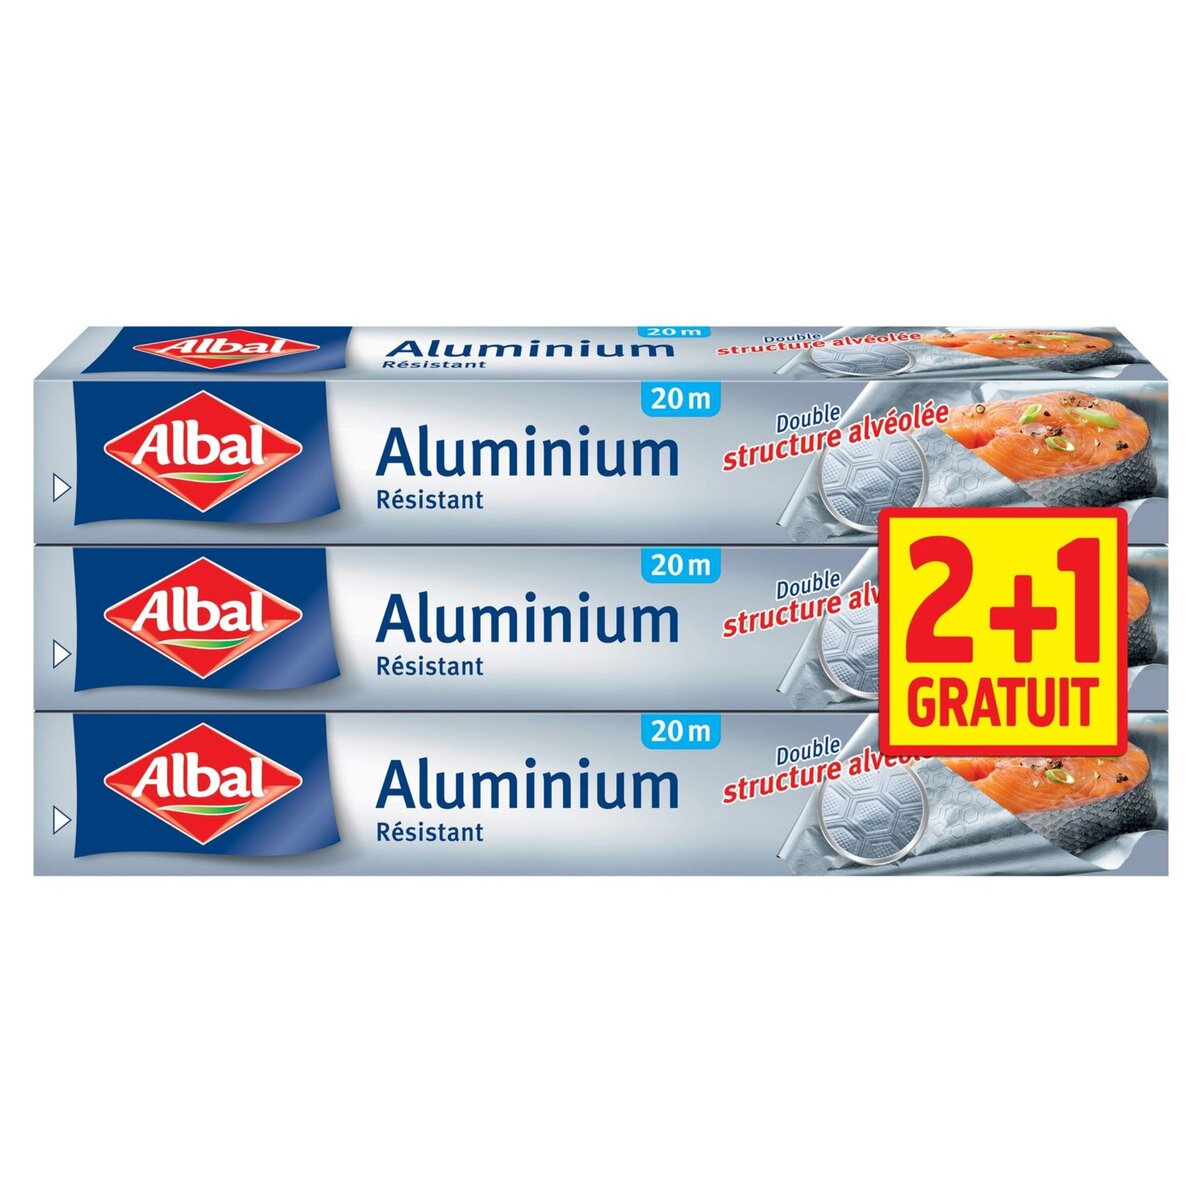 ALBAL Albal aluminium rouleau 20m x2+1offert